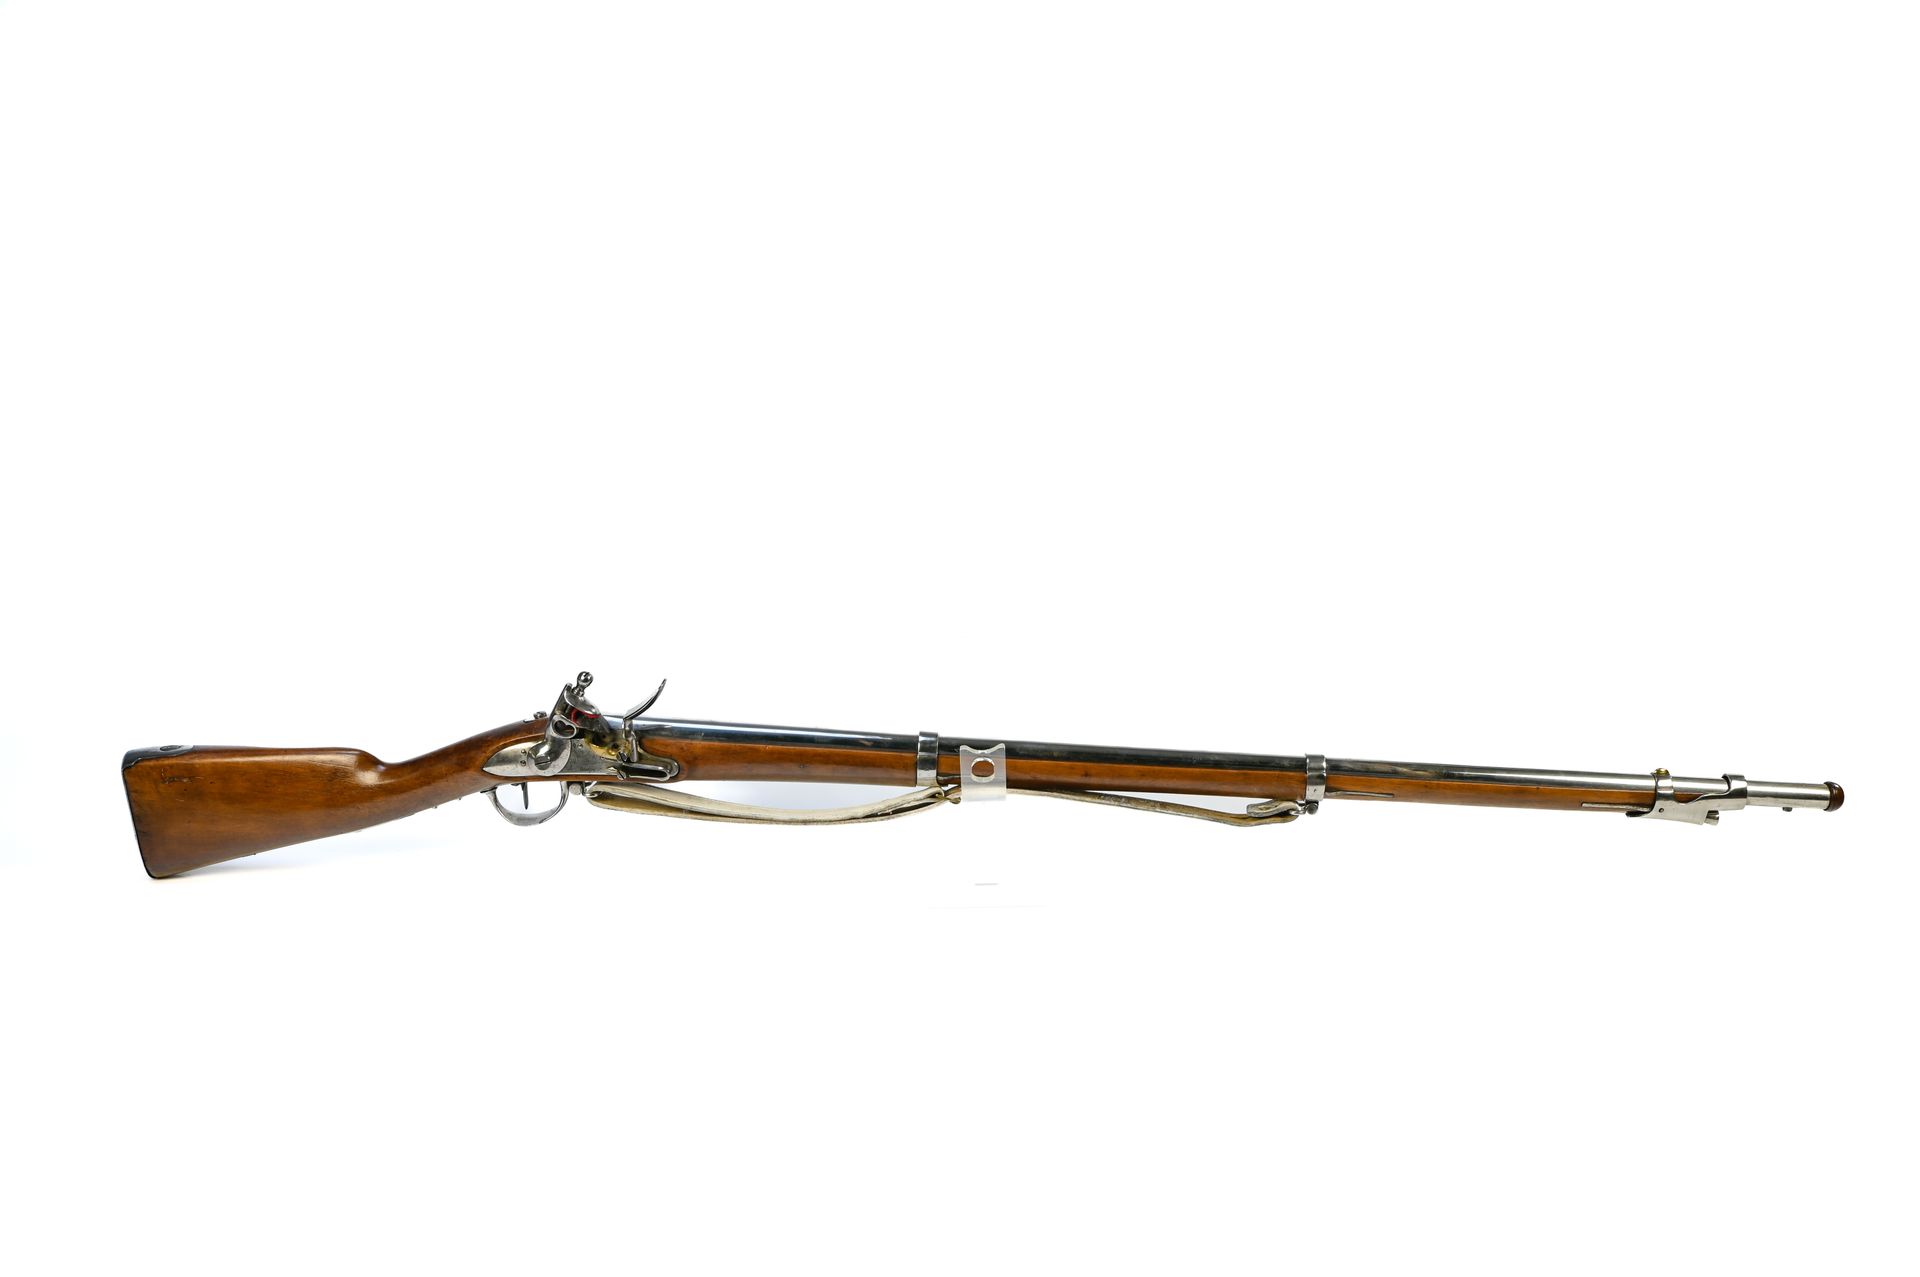 MANUFACTURE ROYALE DE MÜTZIG AÑOS 1810

Real Fábrica de Mützig

Fusil de infante&hellip;